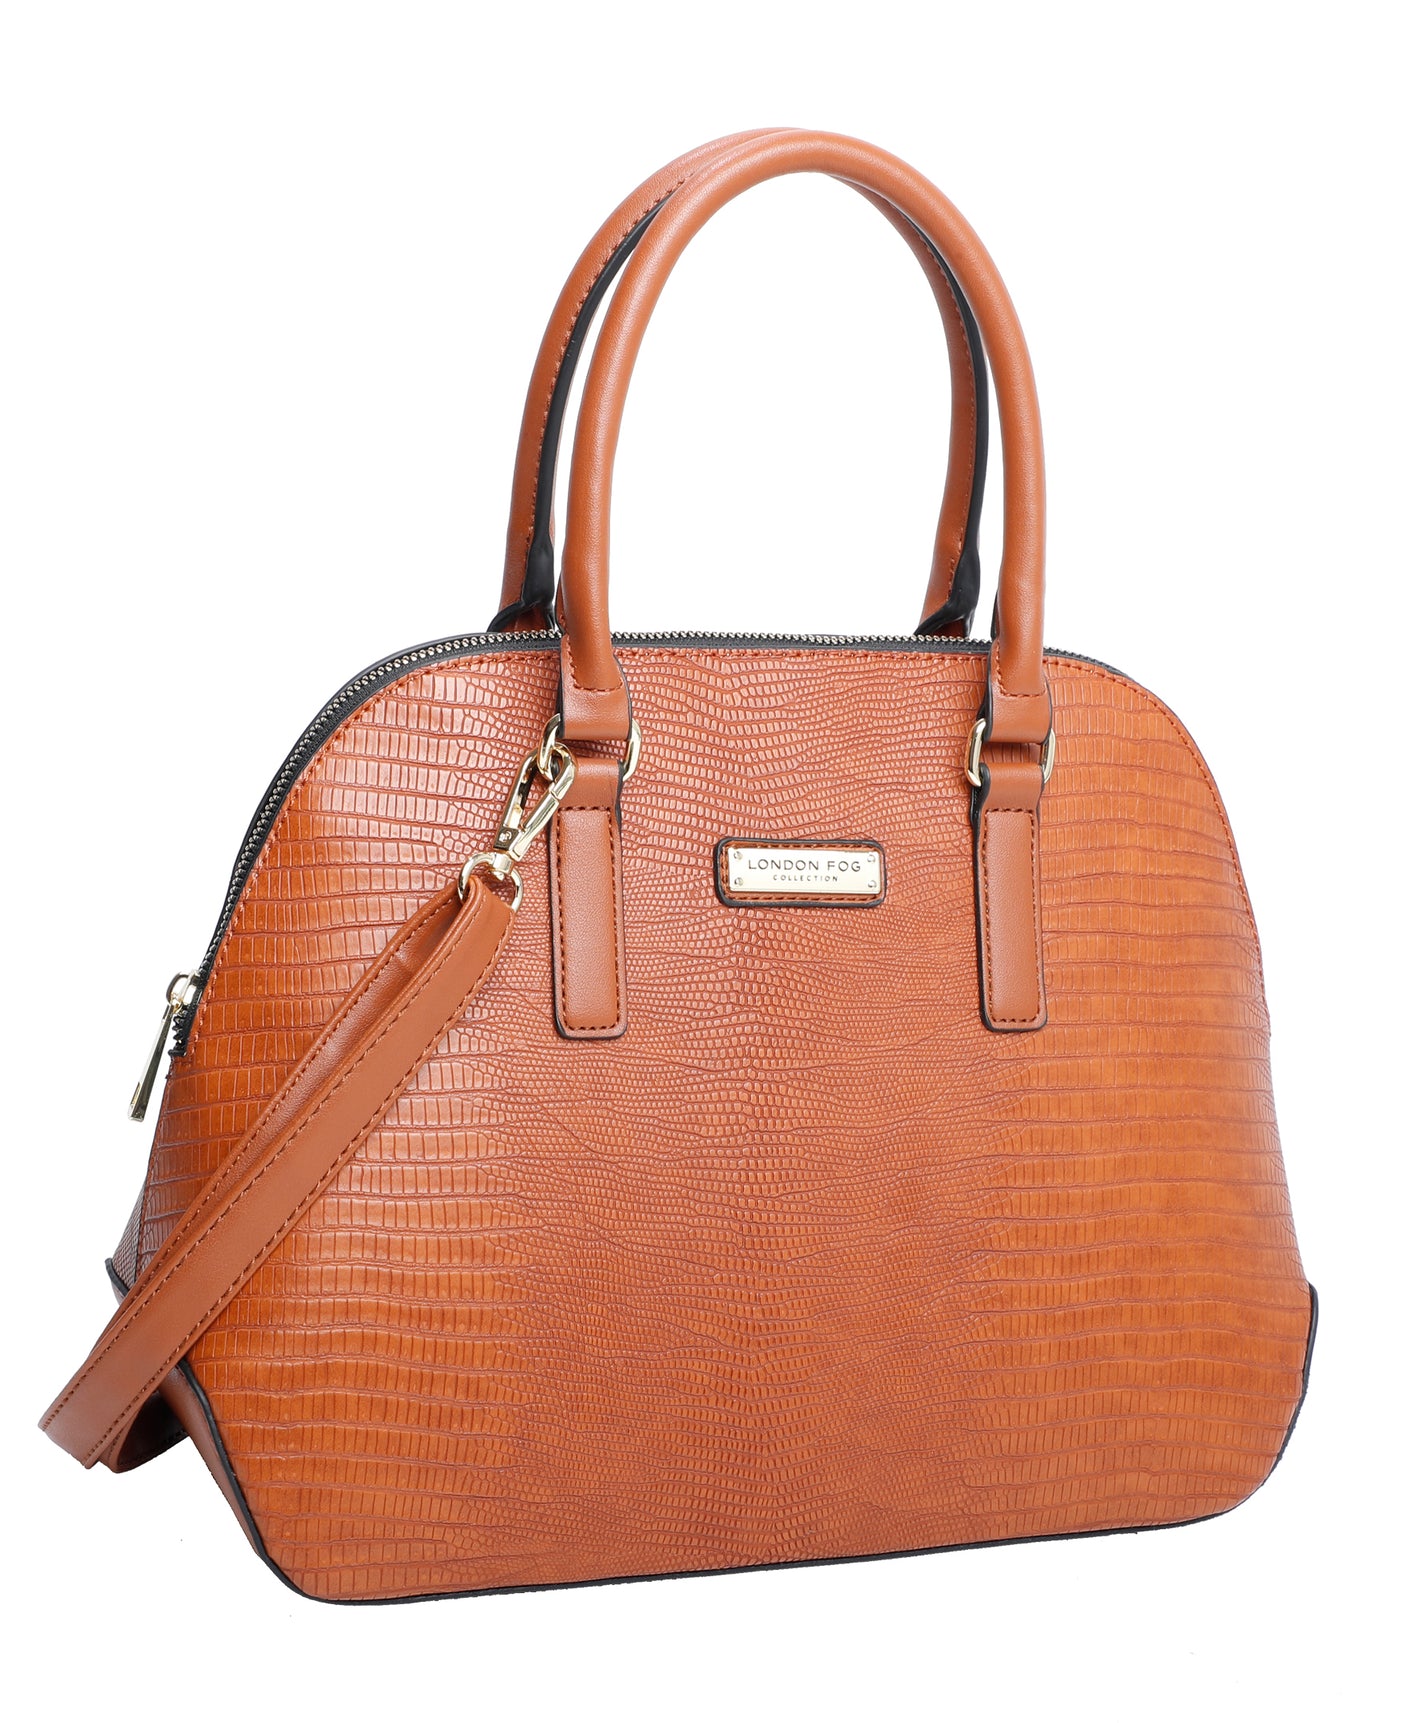 Cognac || cognac satchel purse with handles and adjustable shoulder strap